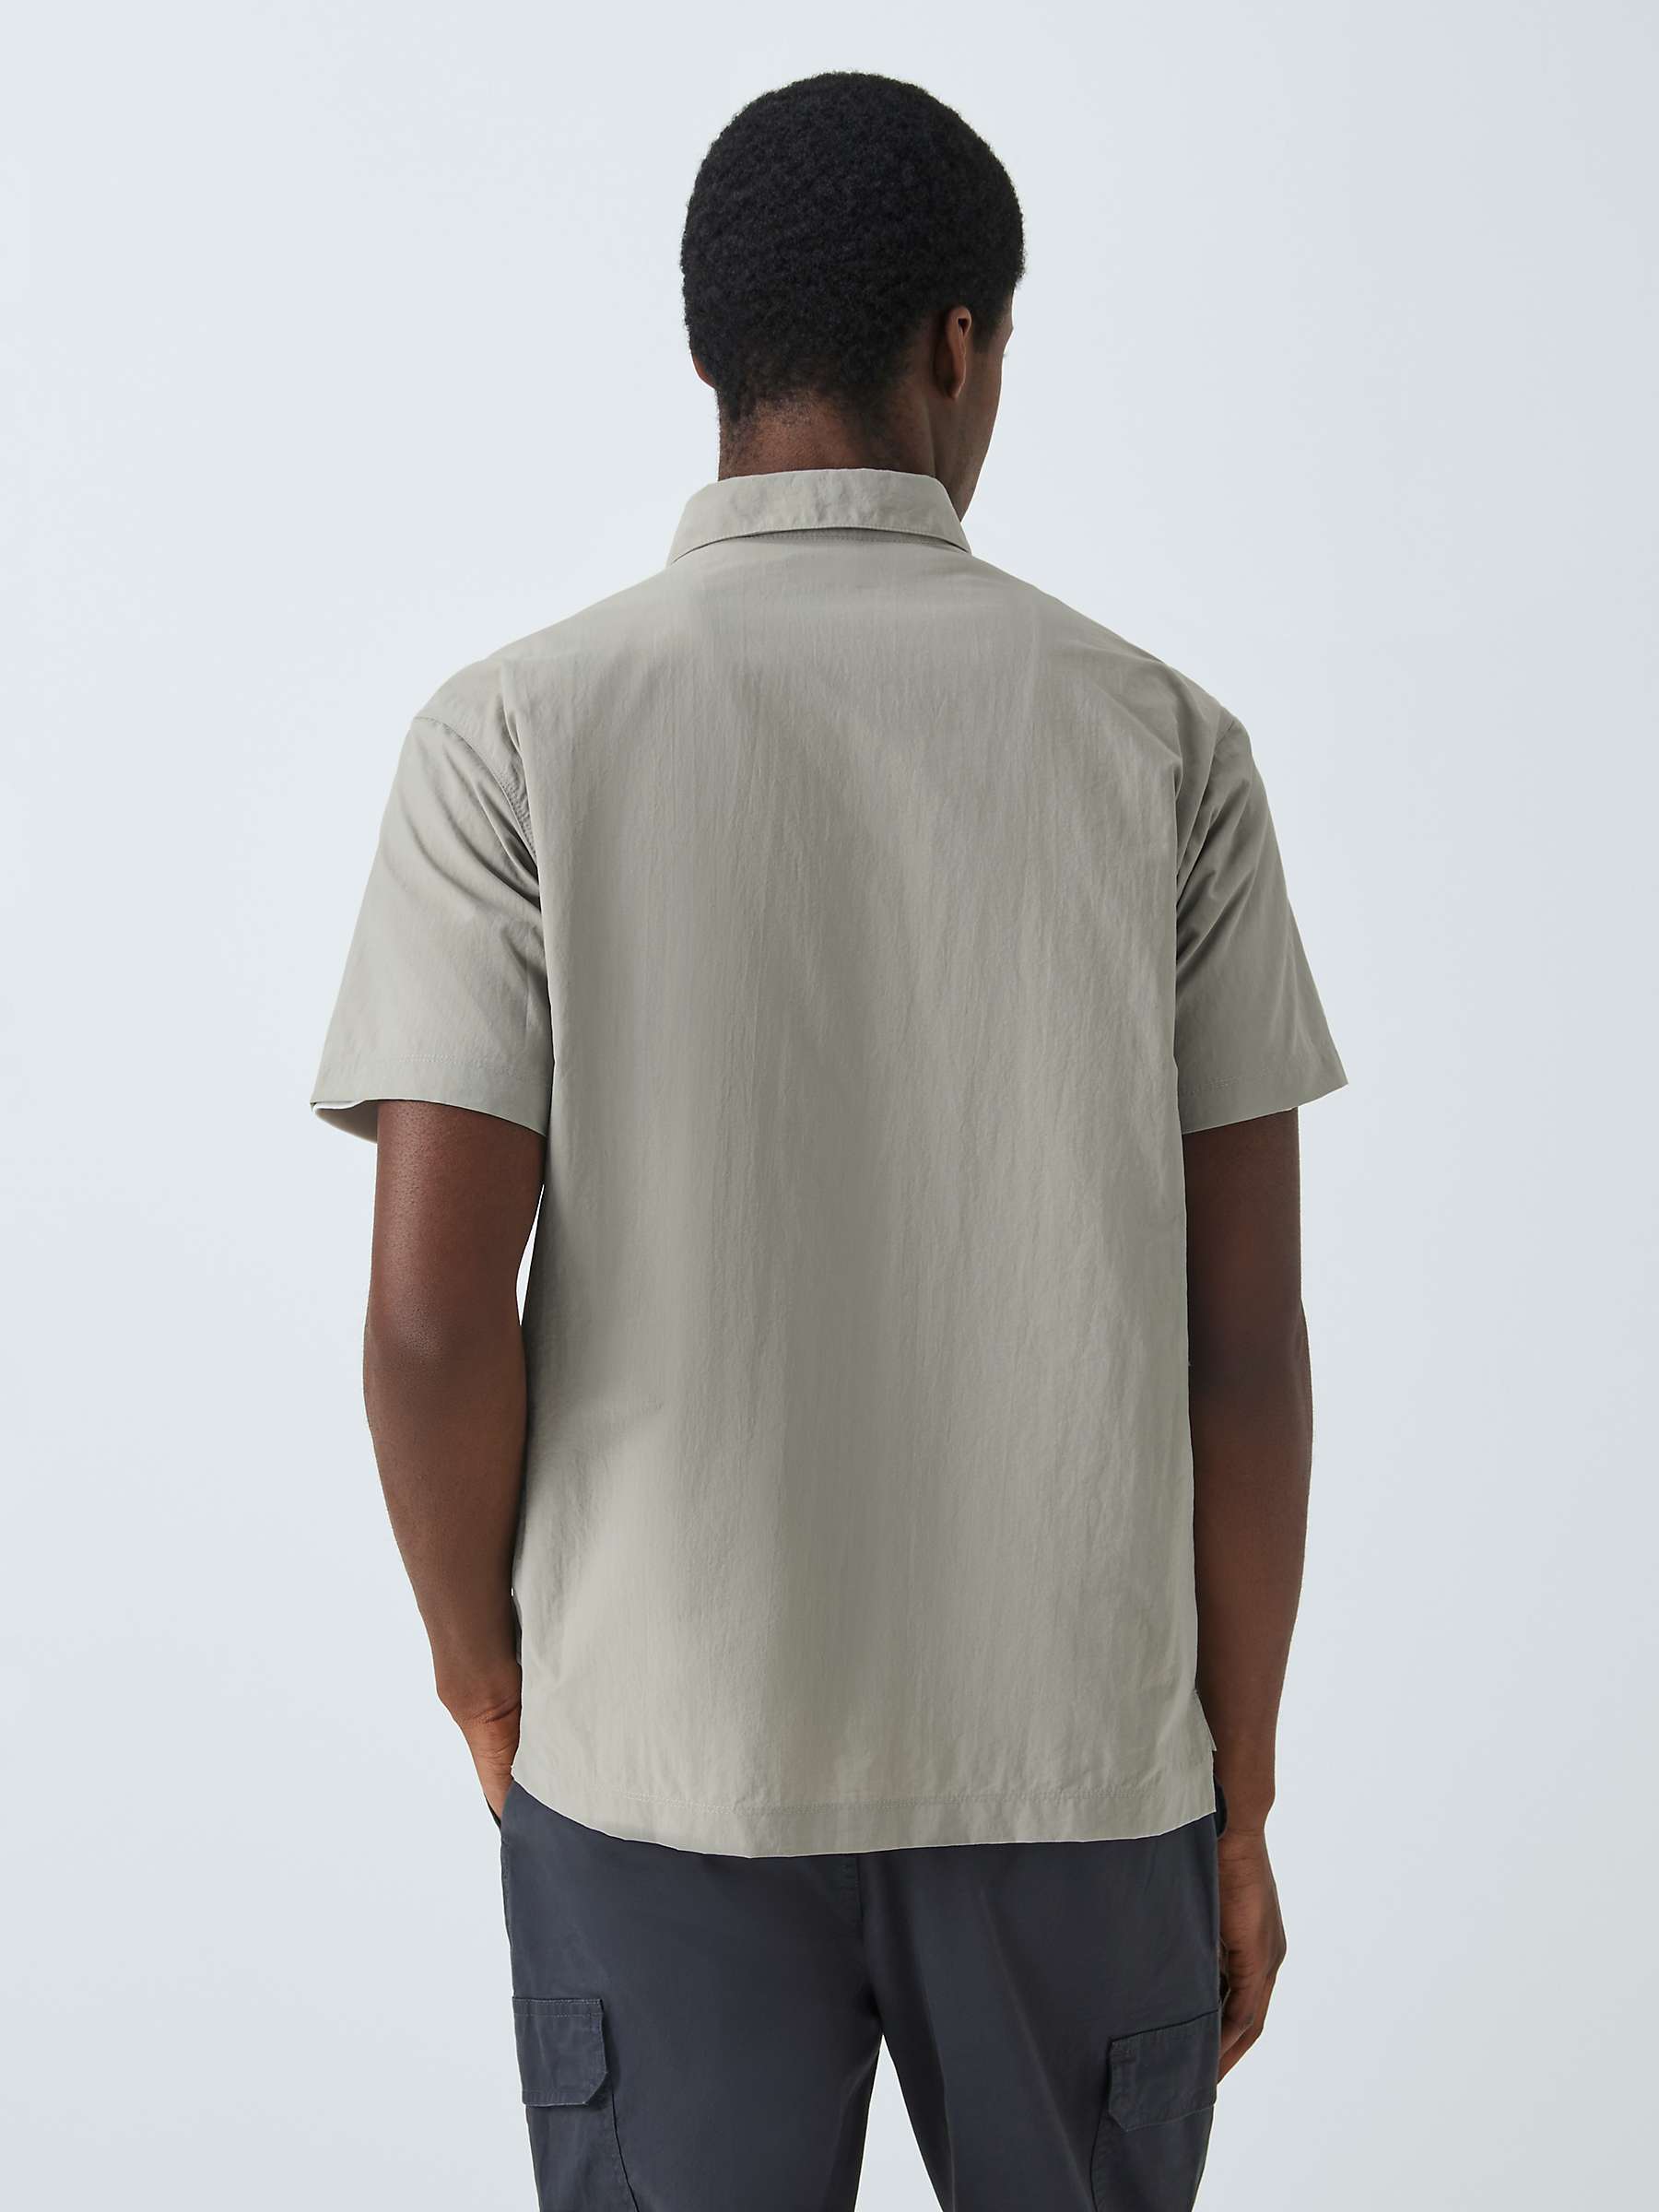 Buy Columbia Mountaindale Short Sleeve Shirt, Flint Grey Online at johnlewis.com